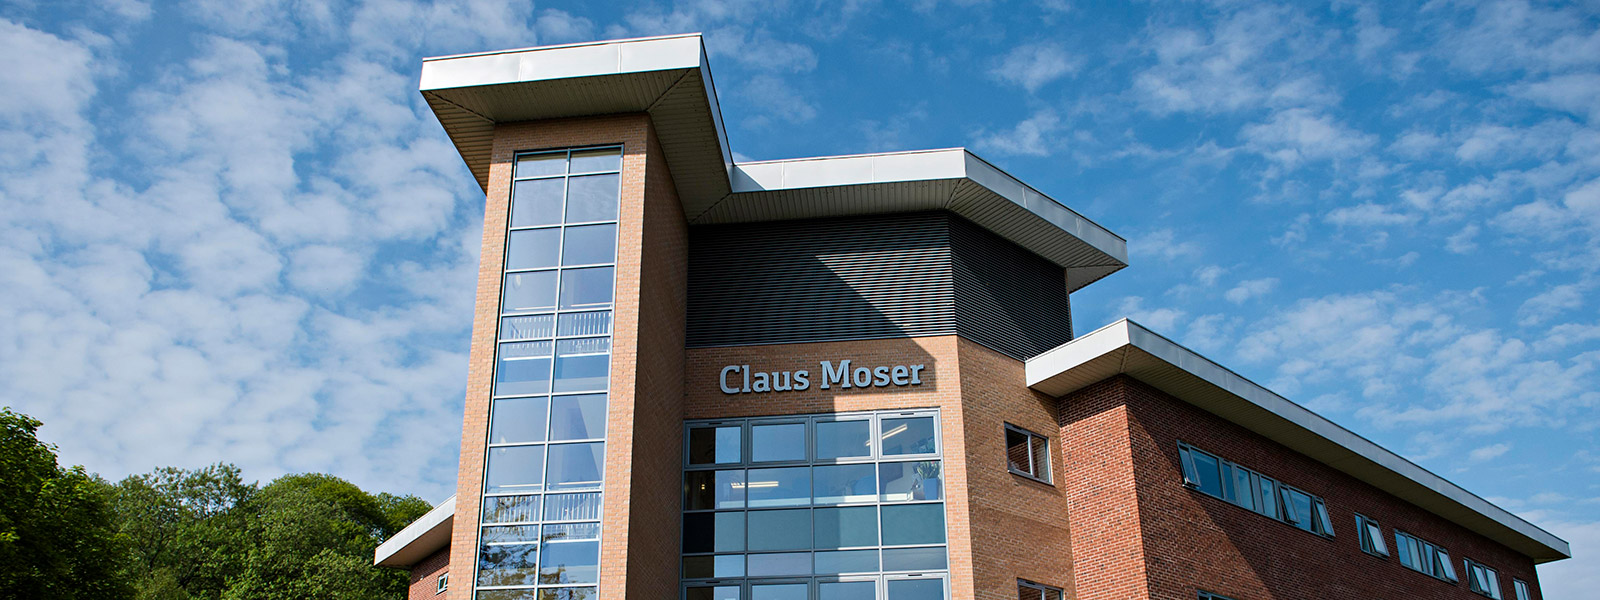 Claus Moser building